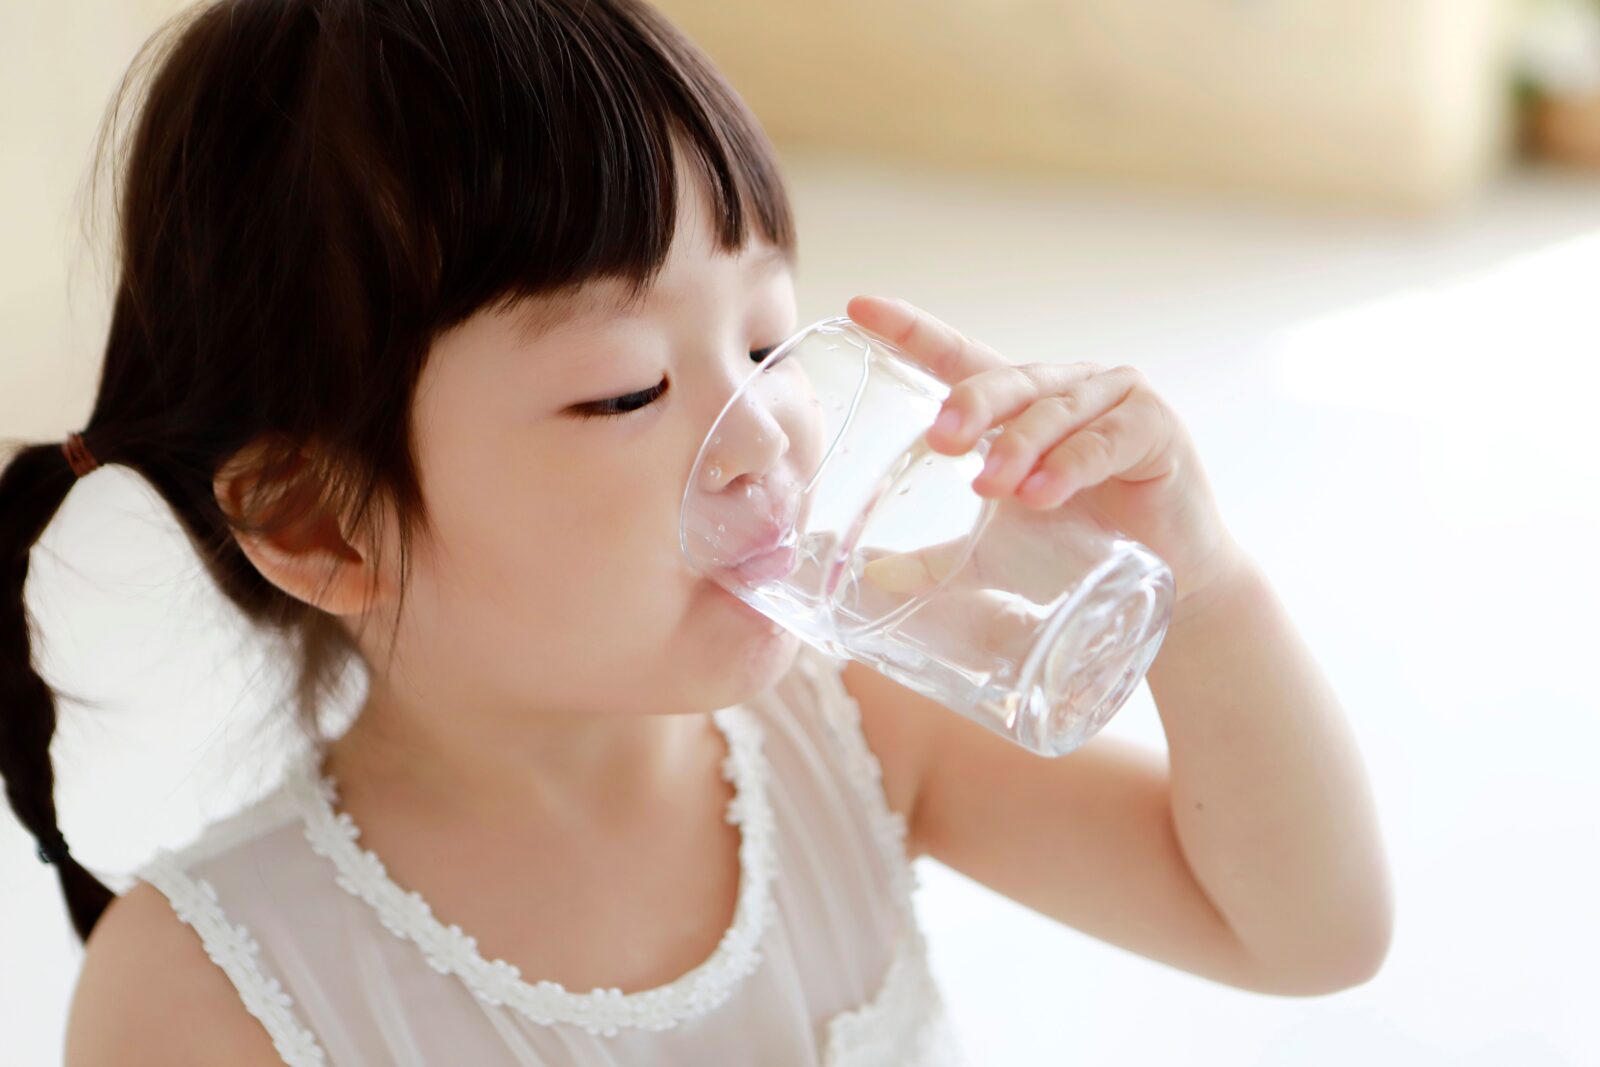 child drinks clean water